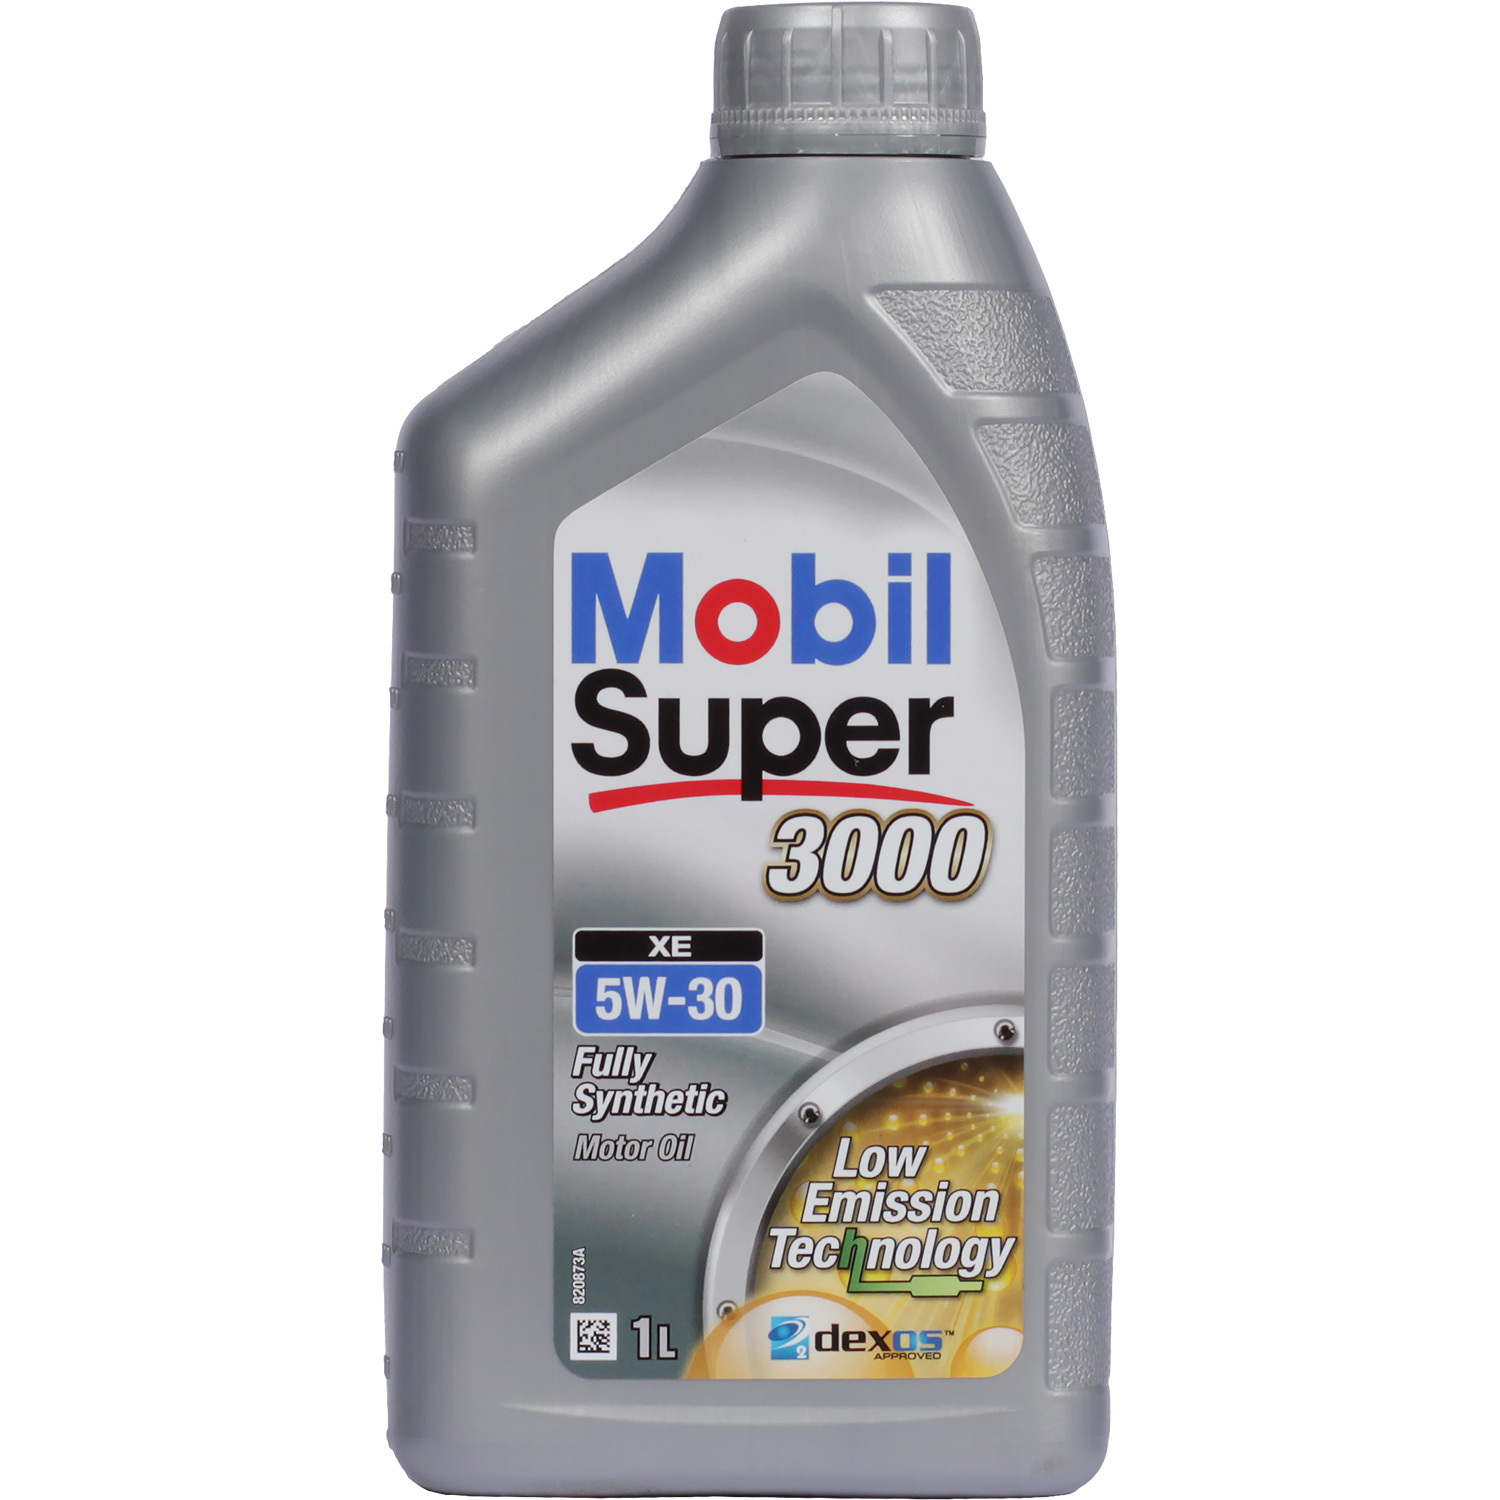 Mobil Моторное масло Mobil Super 3000 XE 5W-30, 1 л масло моторное mobil super 3000 xe 5w–30 синтетическое 4 л